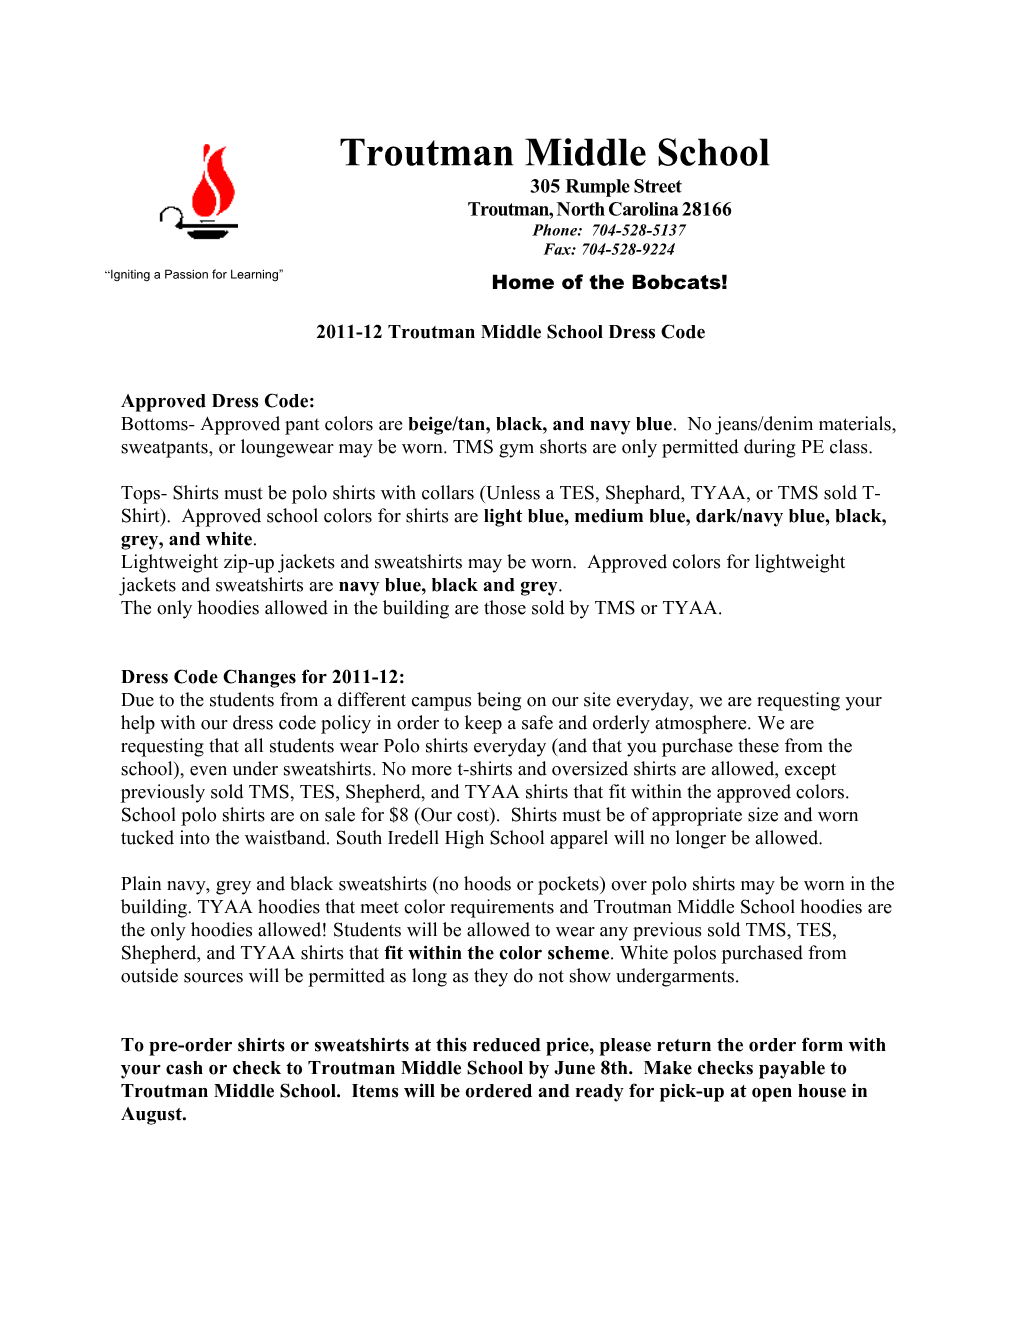 2011-12 Troutman Middle School Dress Code